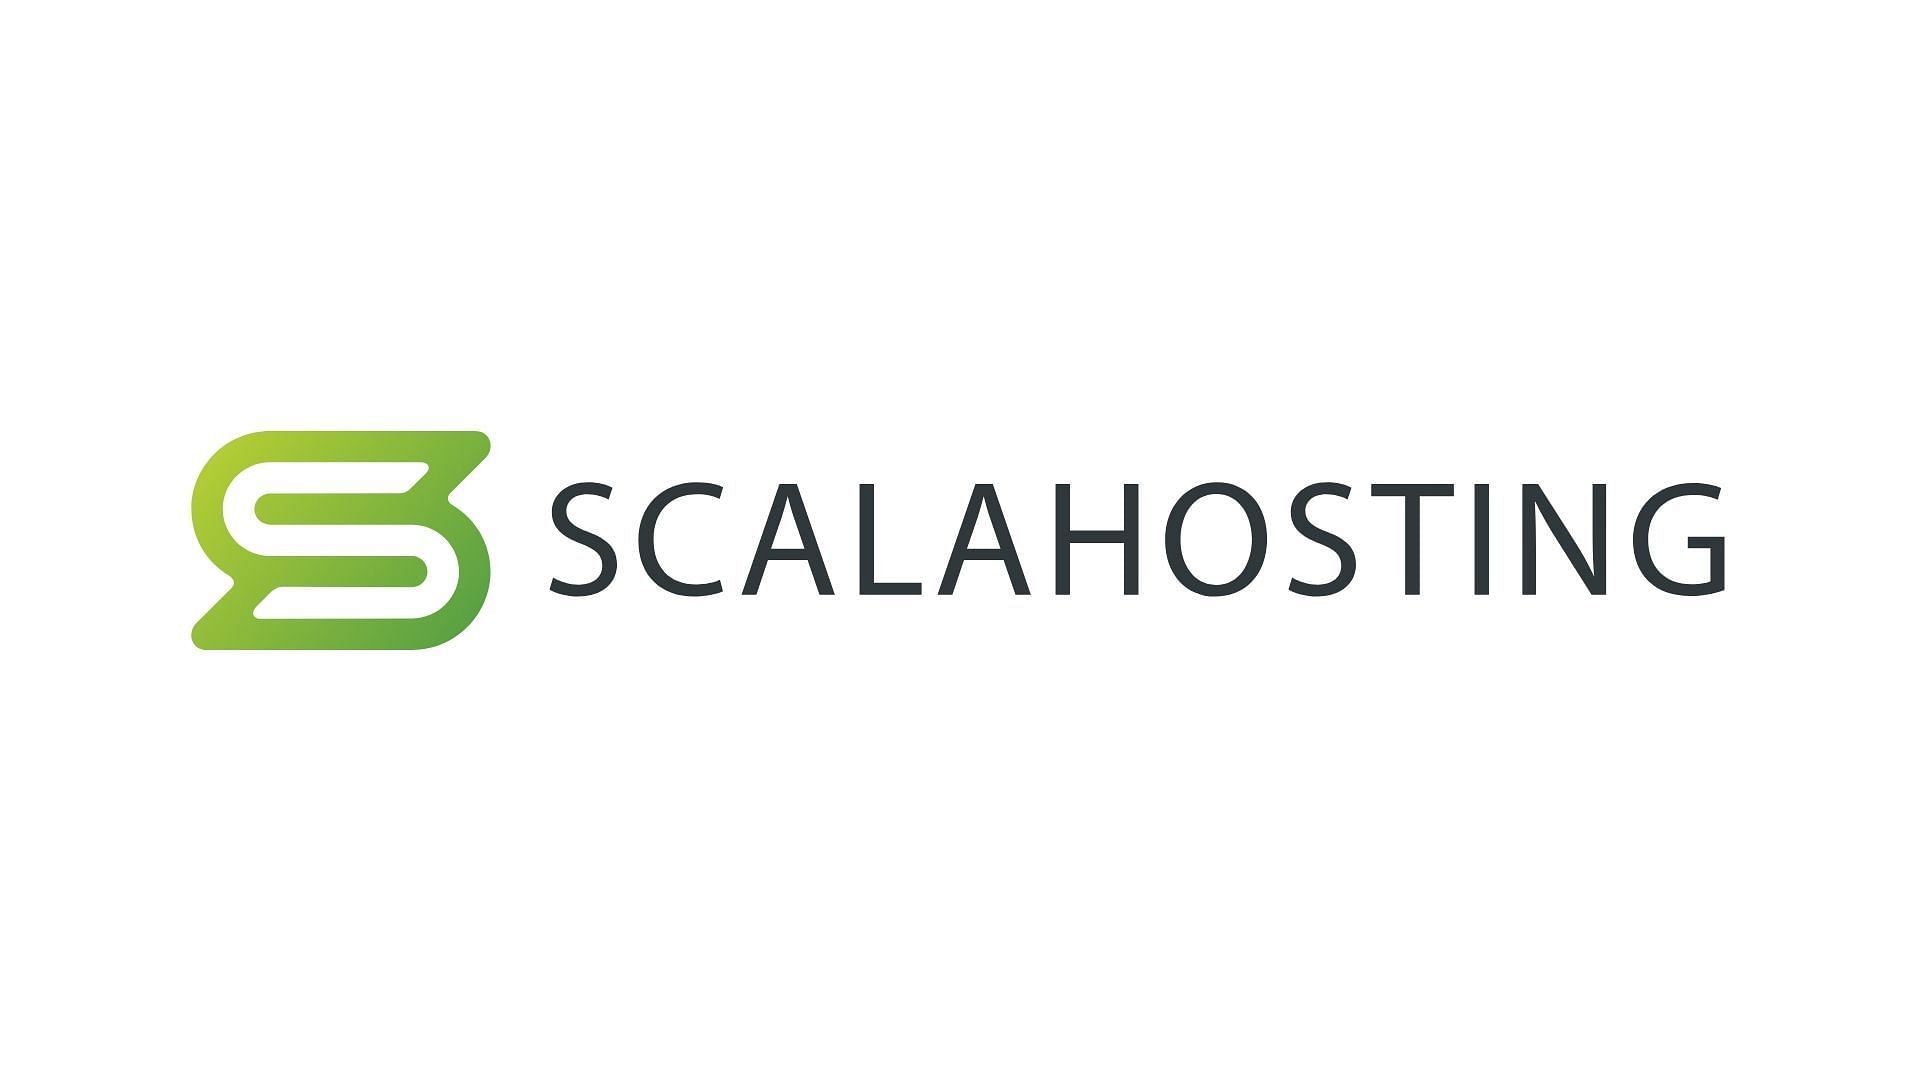 Scalahosting&#039;s official logo (Image via Scalahosting)